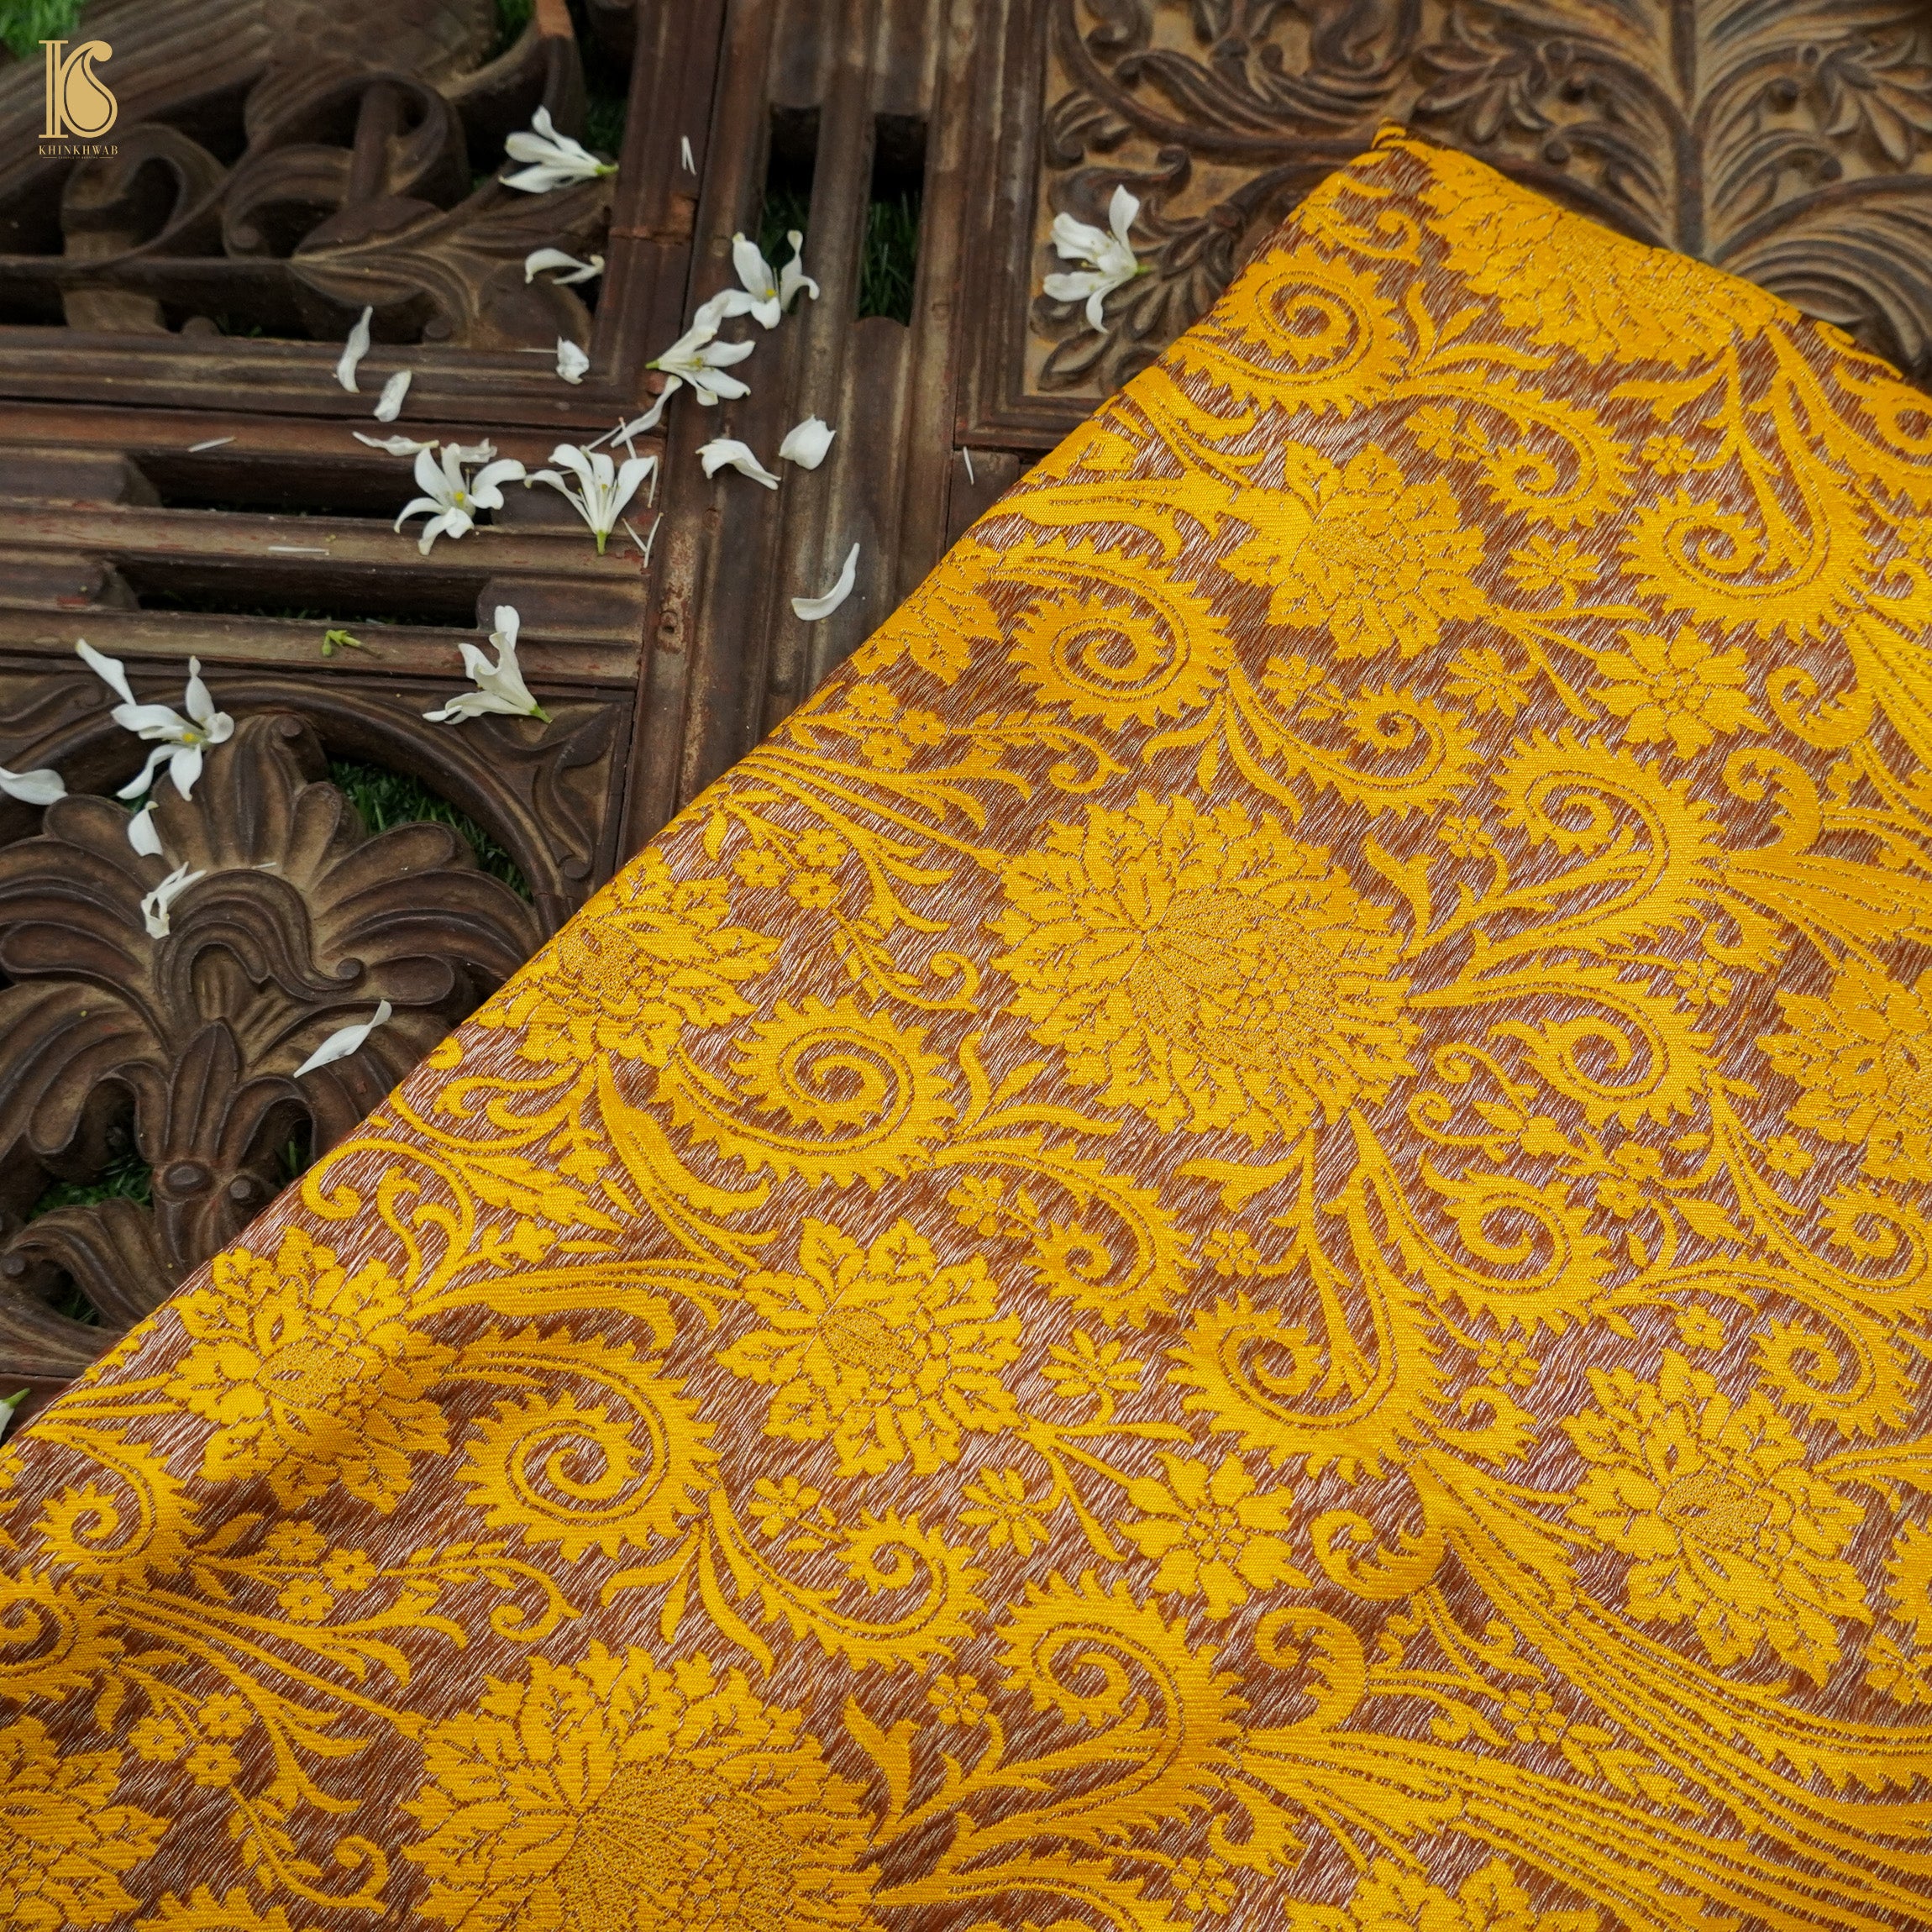 Yellow Pure Kinkhab / Kimkhab Brocade Banarasi Fabric - Khinkhwab